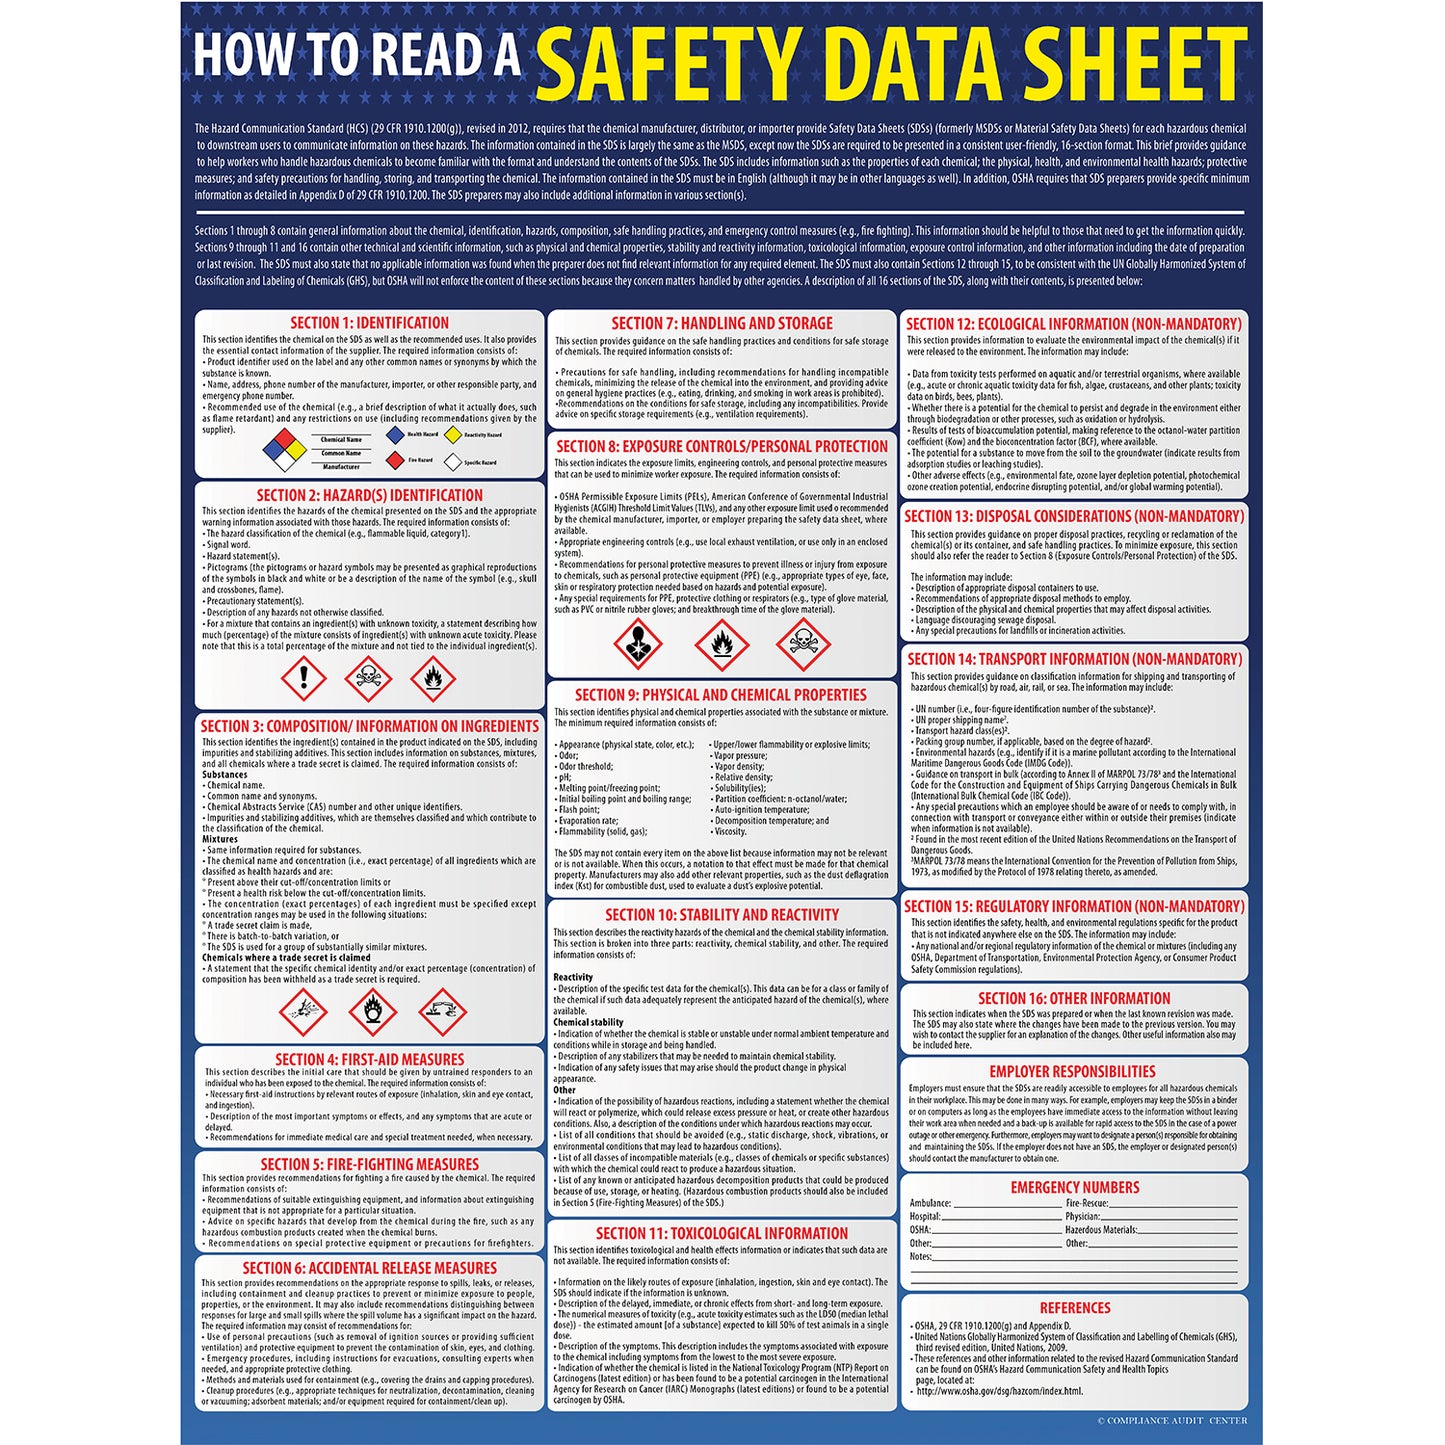 Safety Data Sheet (SDS) Poster